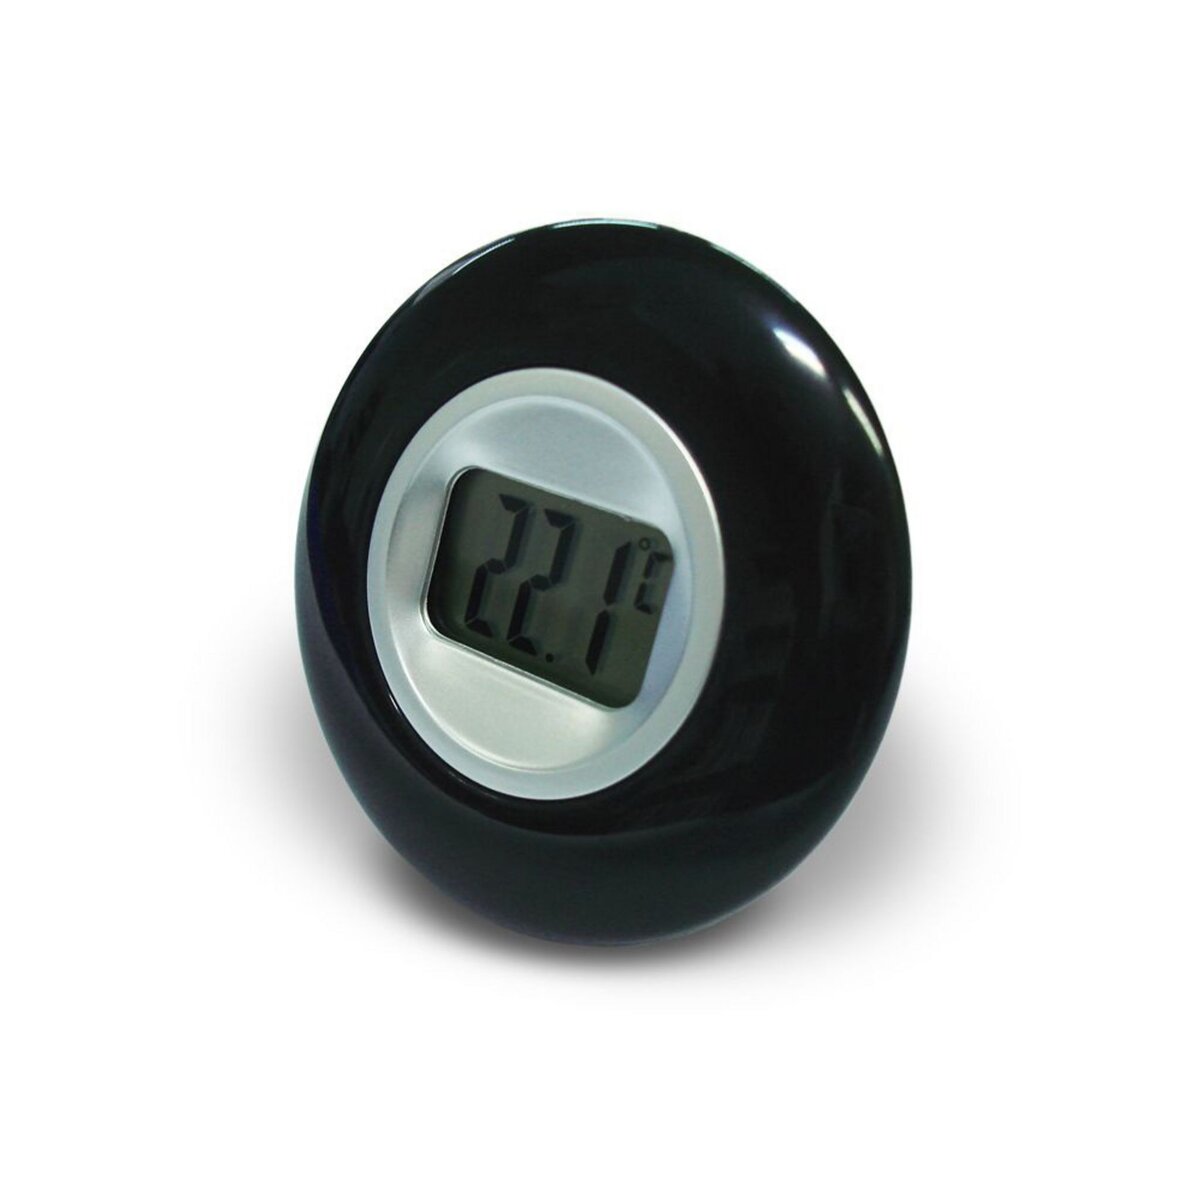 Otio - Thermomètre & Hygromètre 2 affichages Thermometer